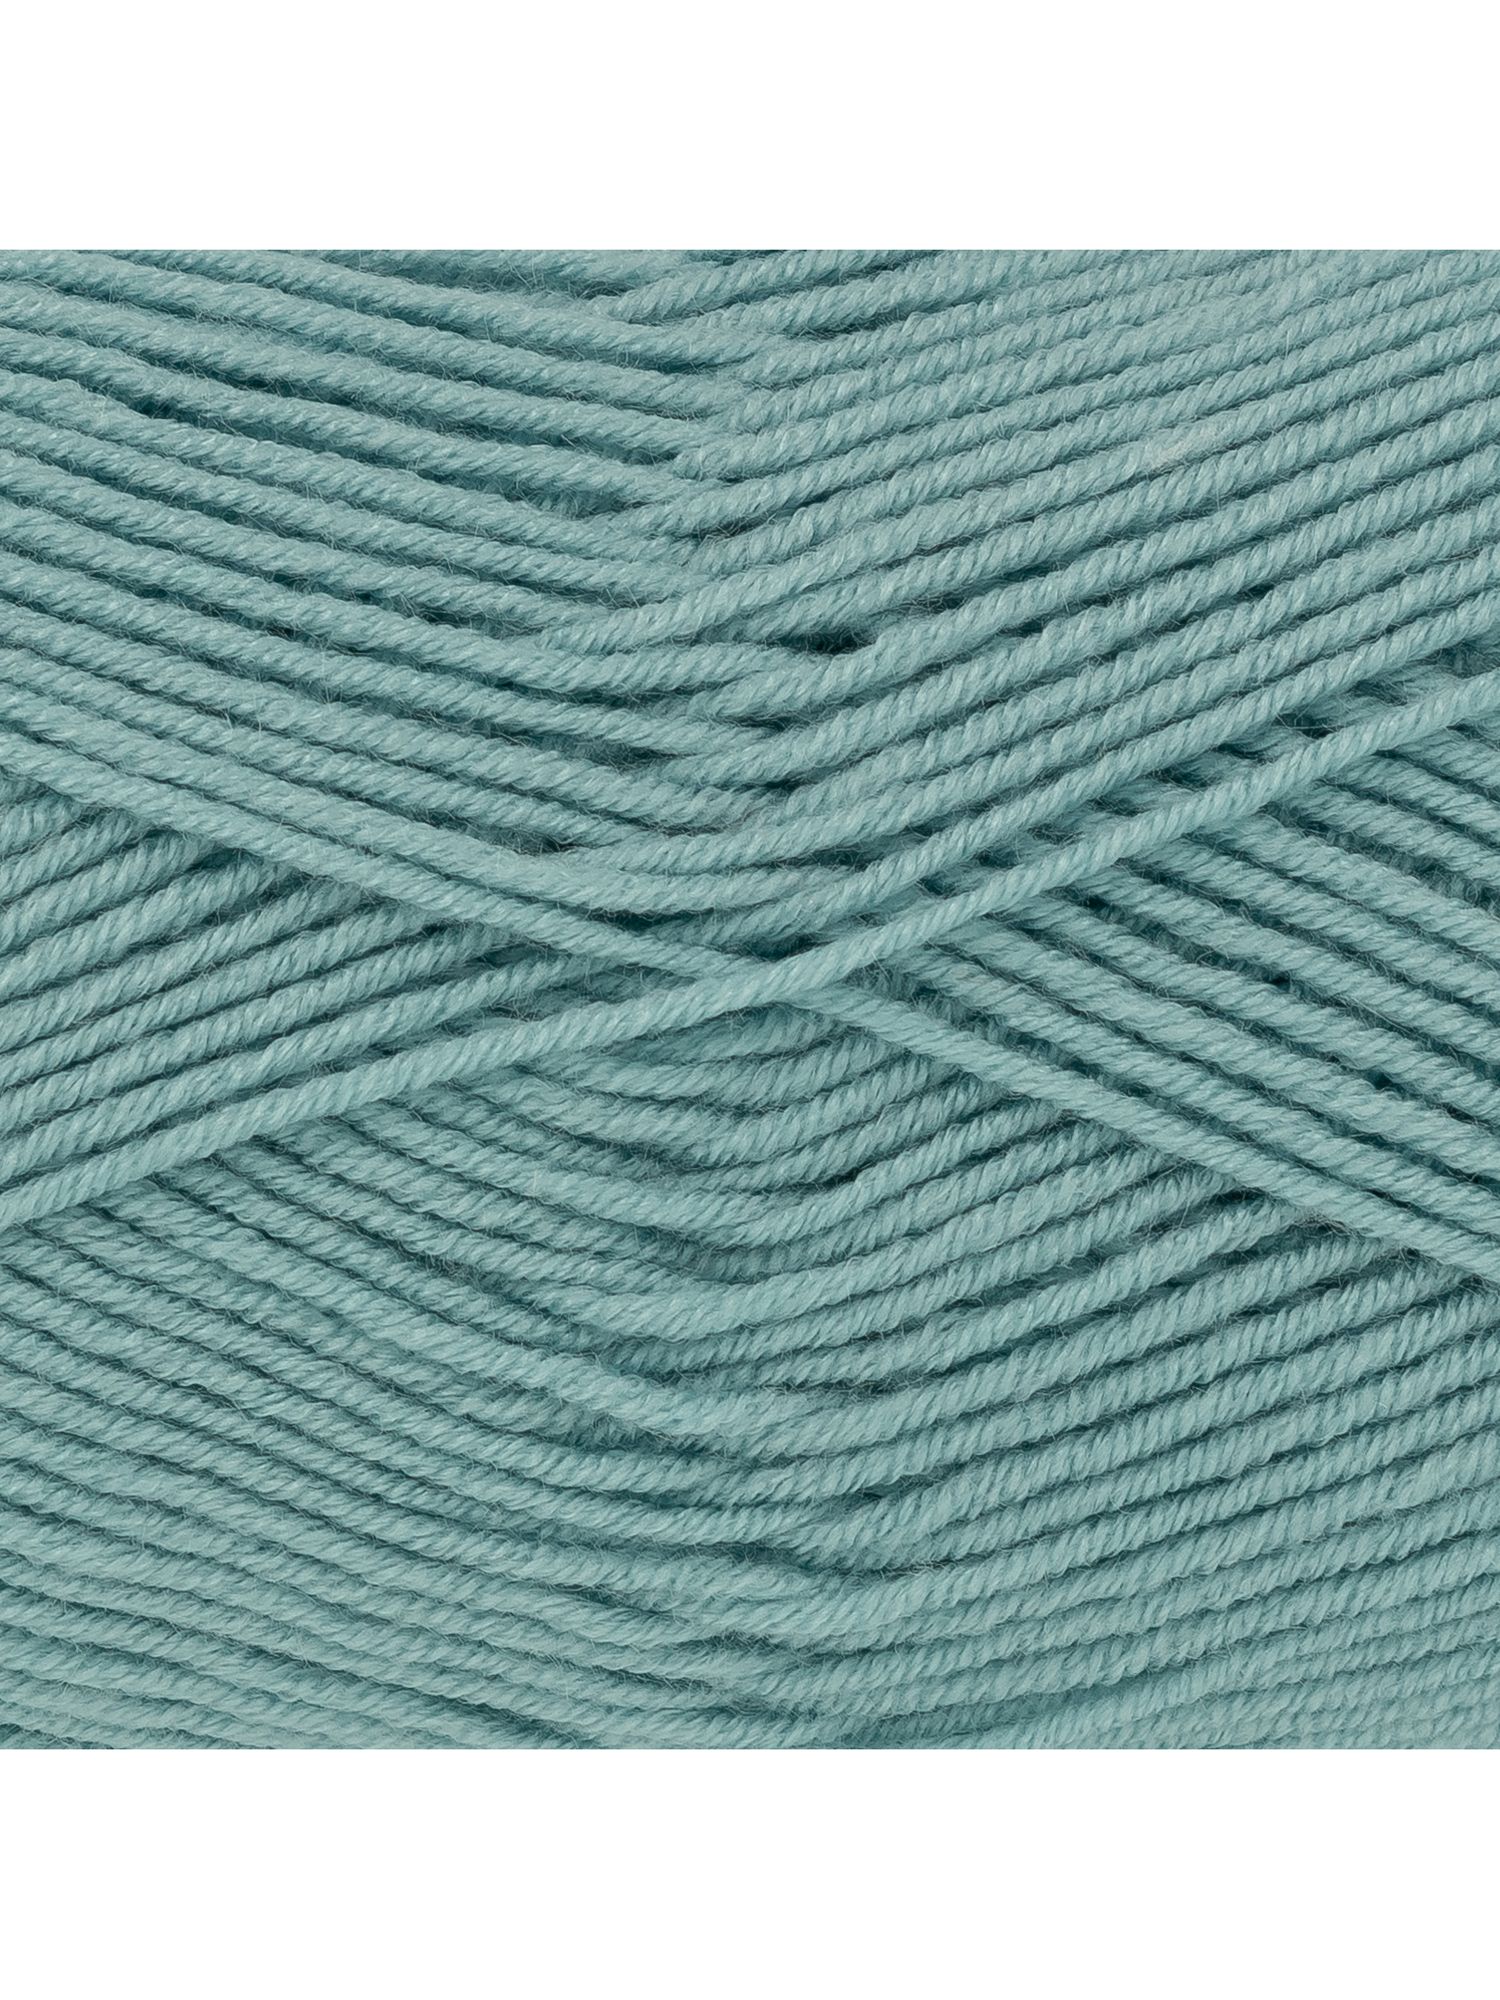 Wool, Yarn, Knitting Wool